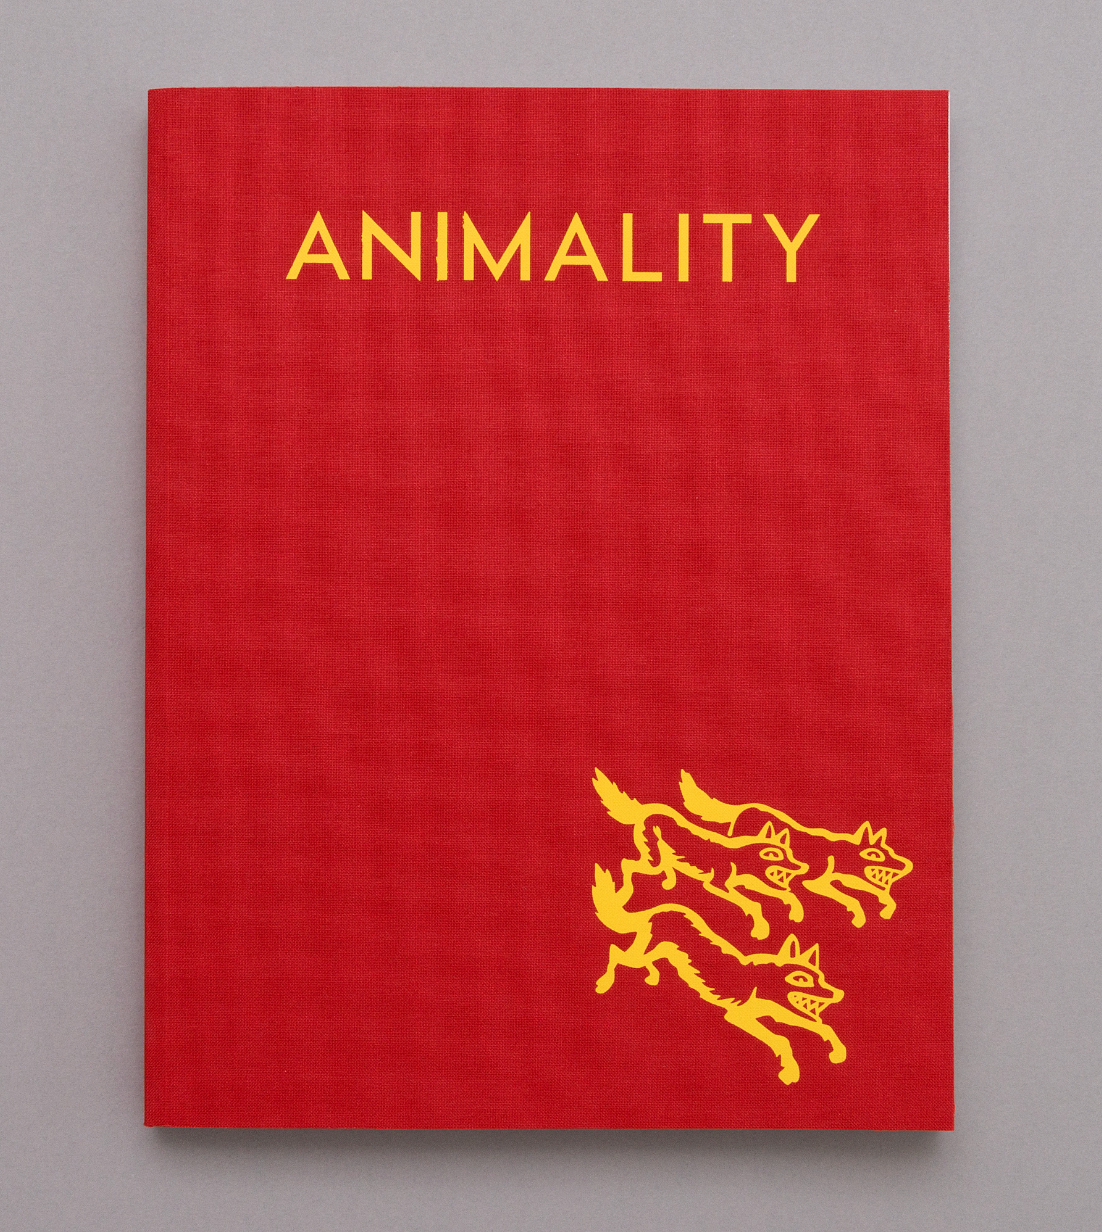 Animality - Marian Goodman Gallery